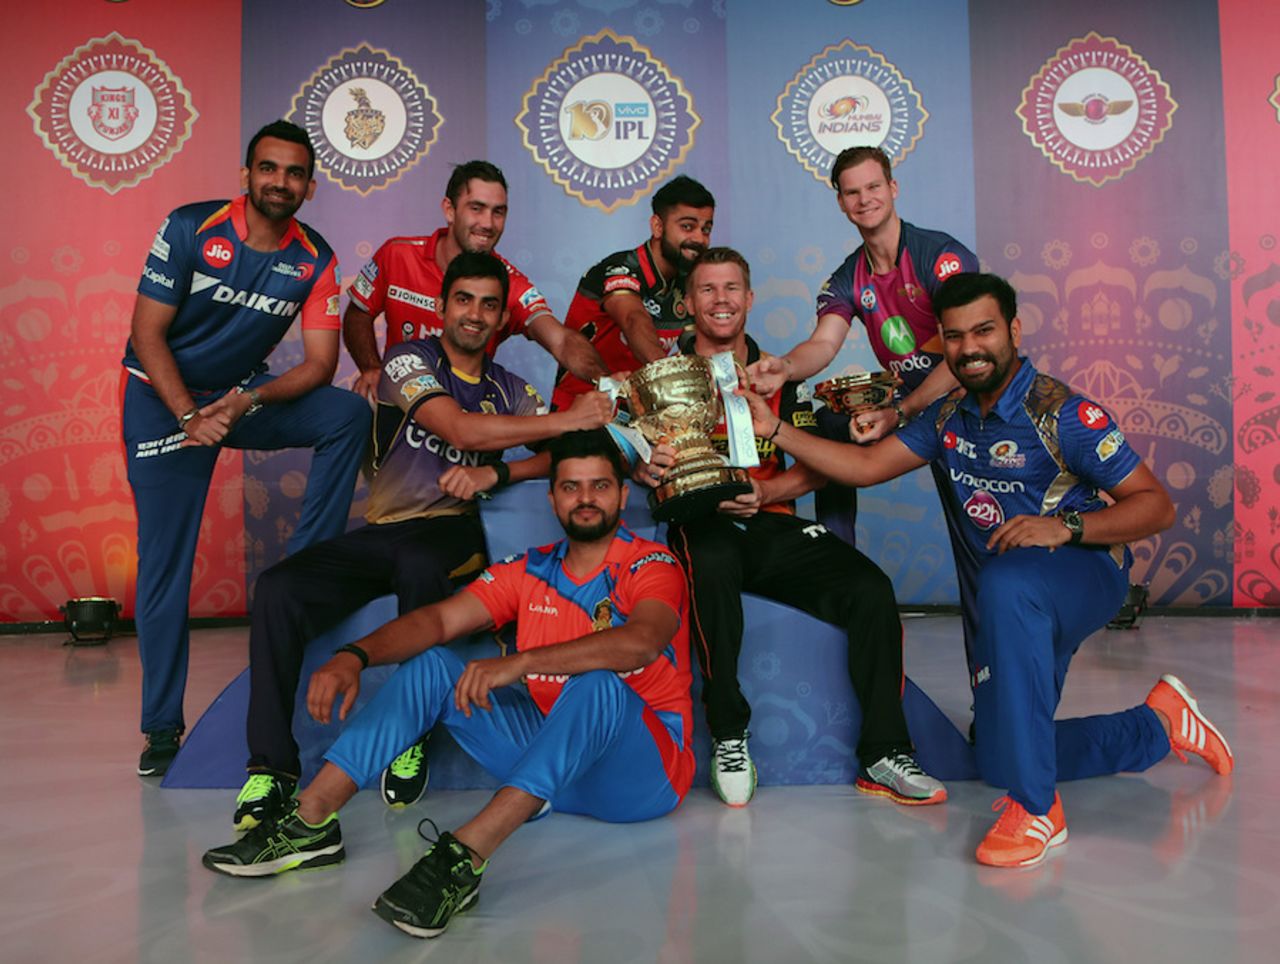 The IPL captains - Zaheer Khan, Suresh Raina, Glenn Maxwell, Gautam Gambhir, Rohit Sharma, Steven Smith, Virat Kohli and David Warner - with the trophy, April 4, 2017